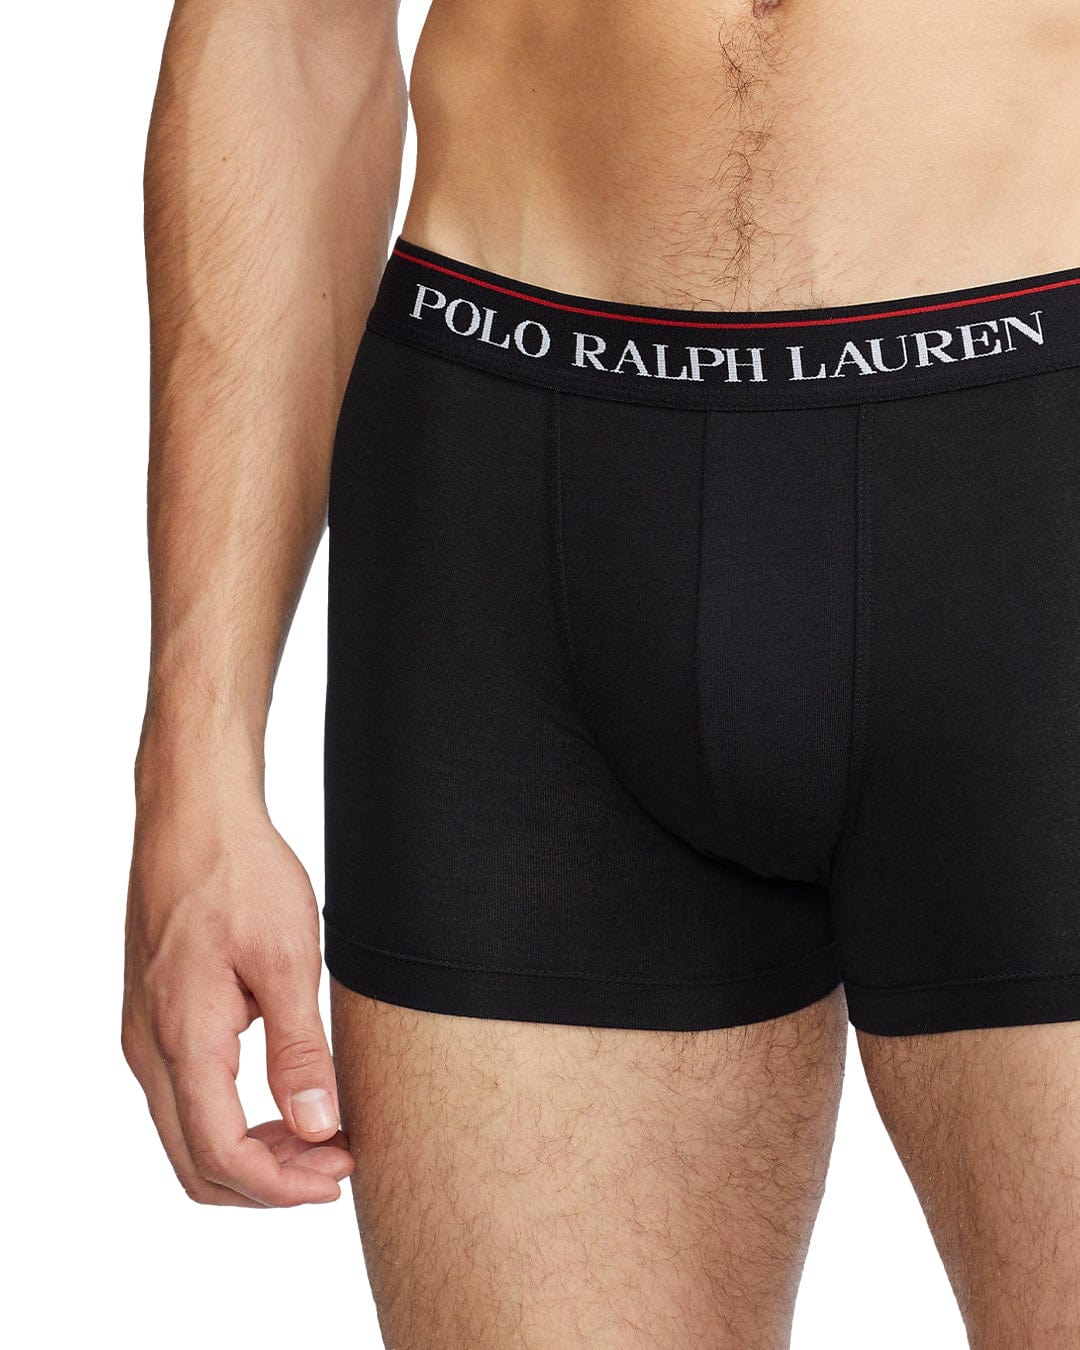 Polo Ralph Lauren Underwear Polo Ralph Lauren Grey, Red And Black Three-Pack Trunks